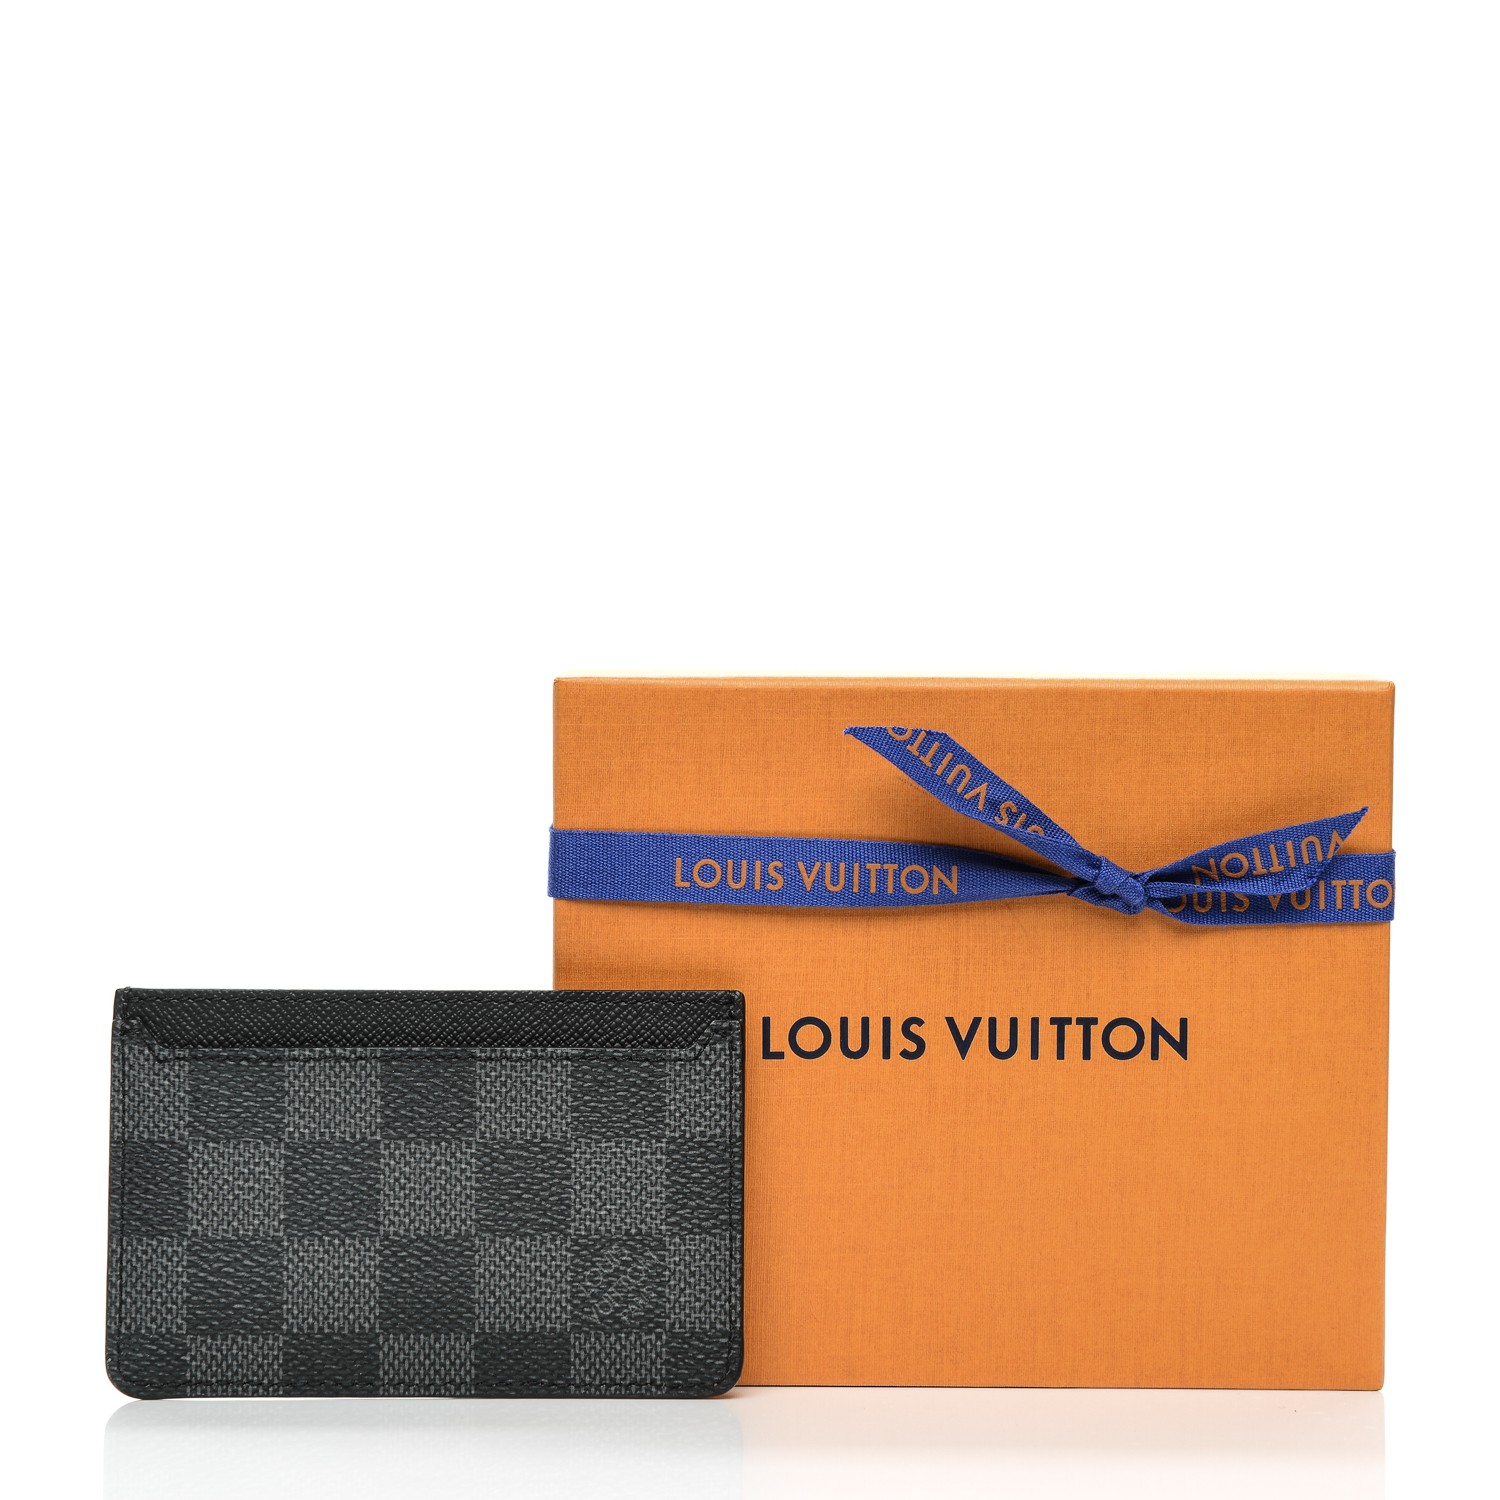 Louis Vuitton Damier Graphite Neo Porte Cartes Card Holder